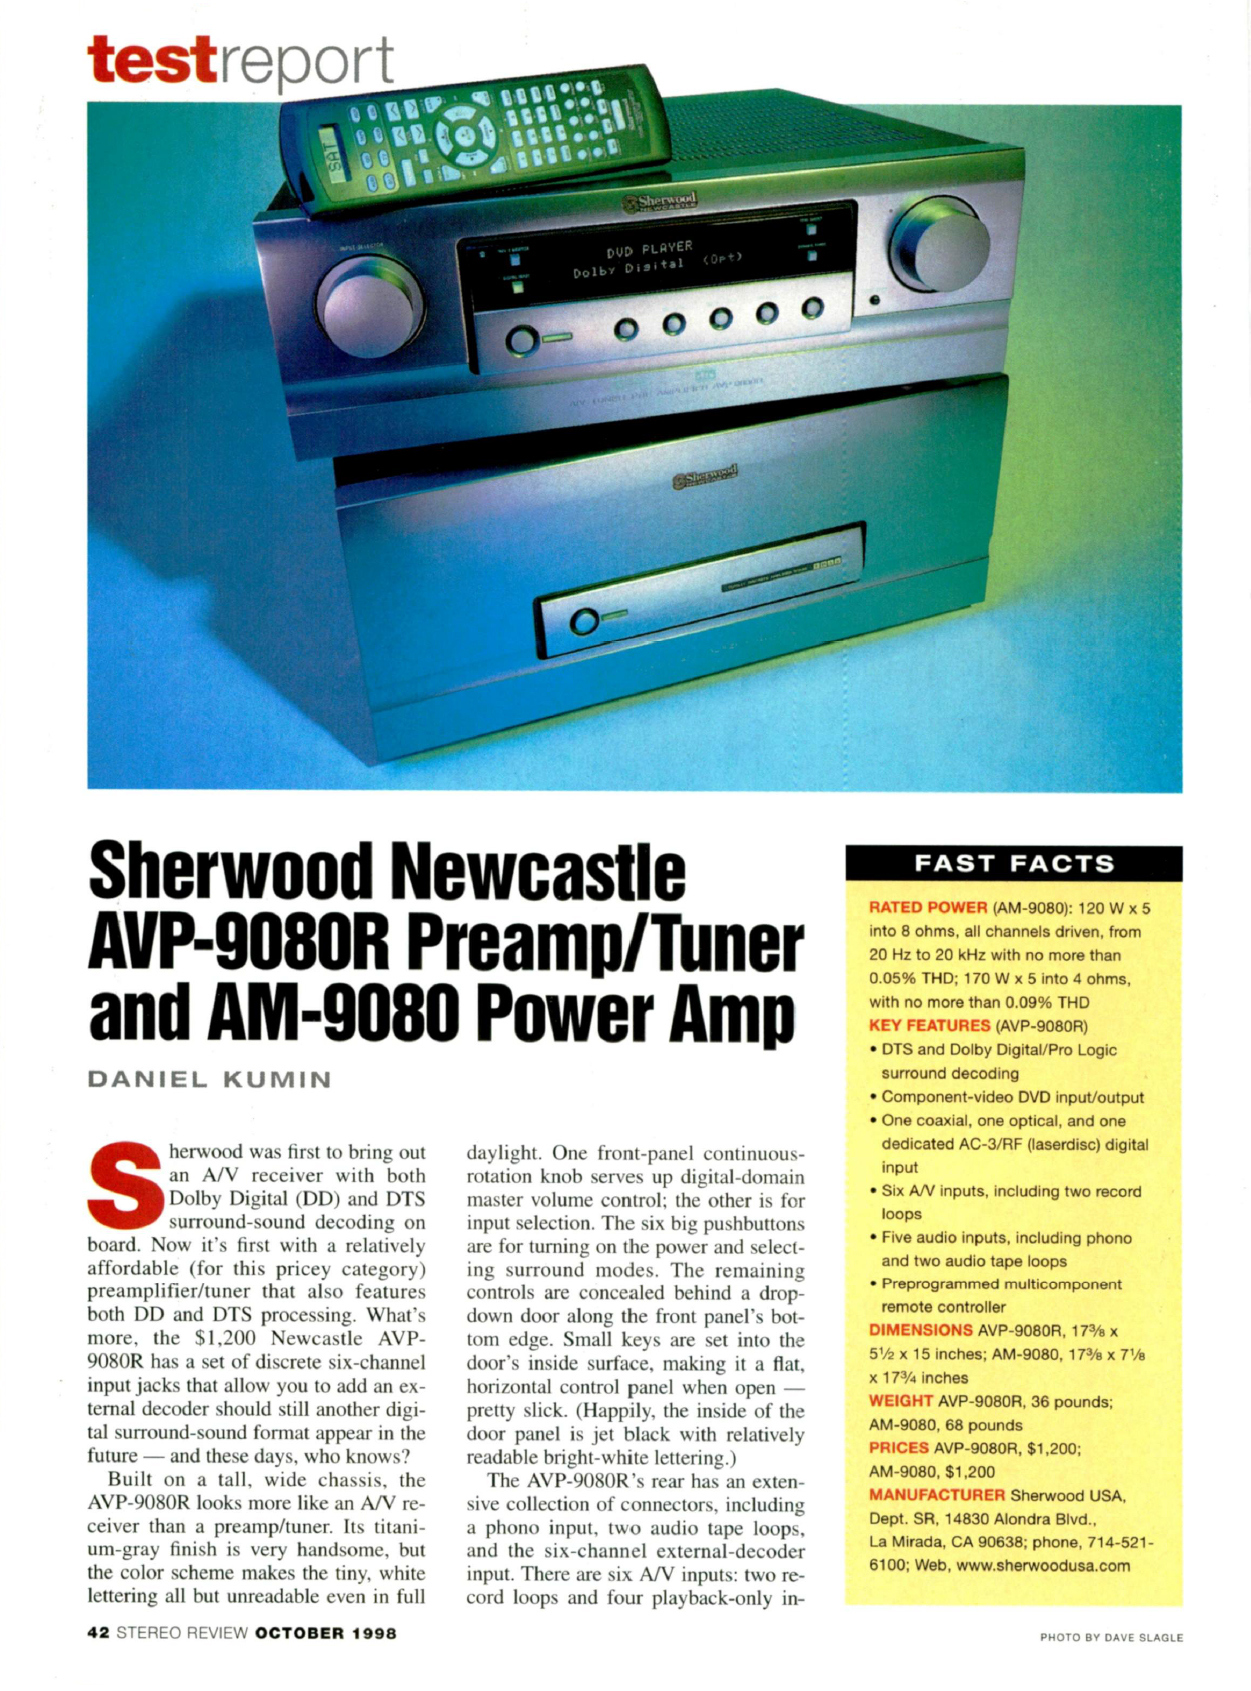 Sherwood AM-AVP-9080 R-Bericht-1998.jpg